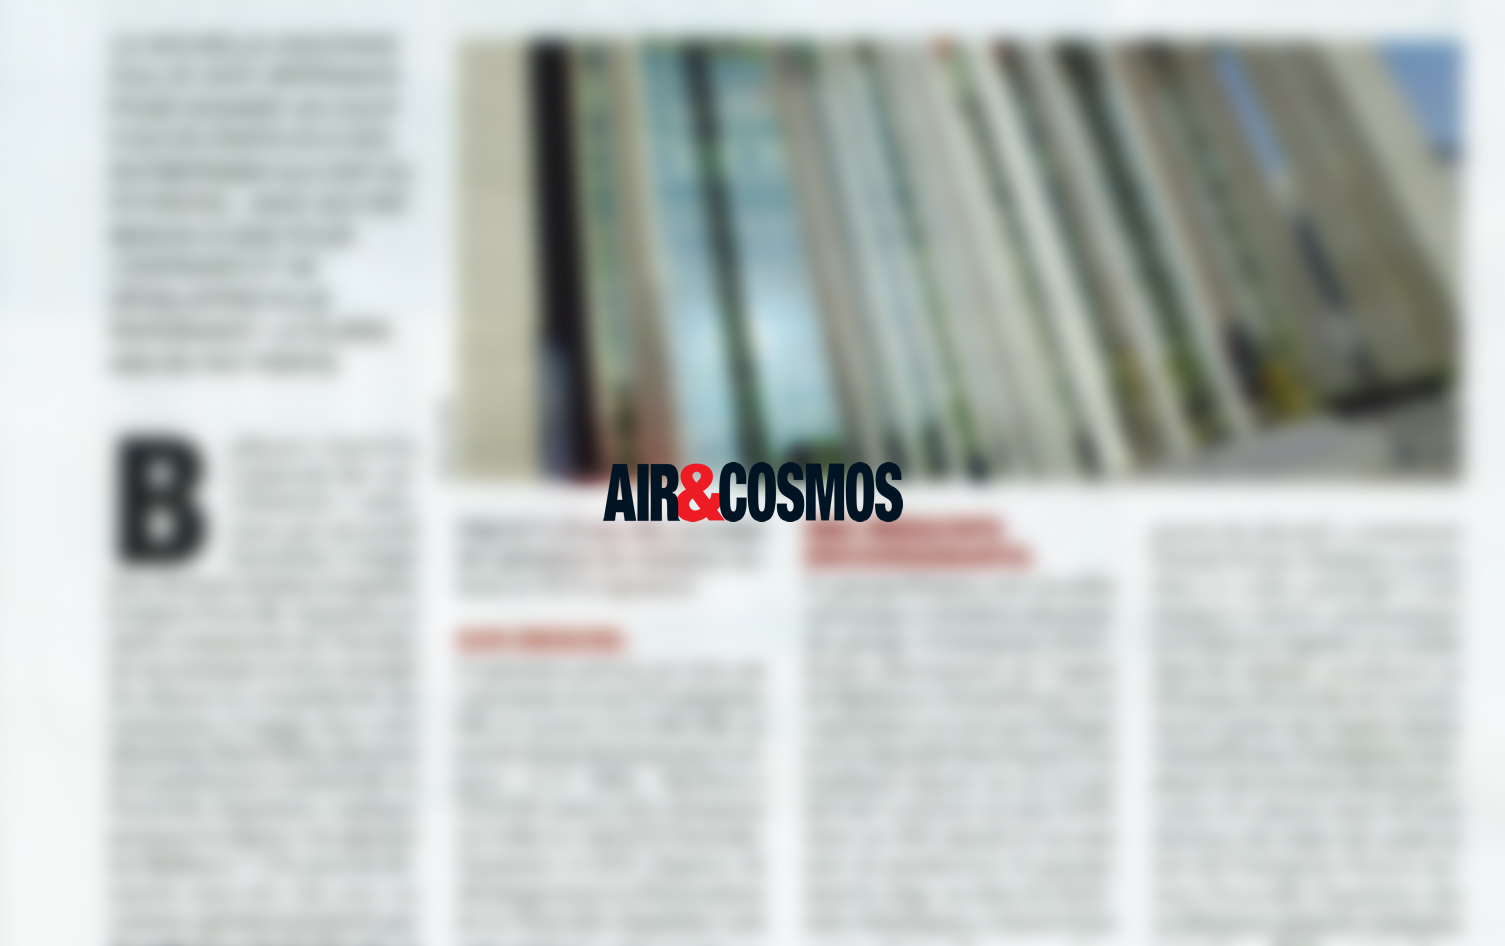 Article Air&Cosmos